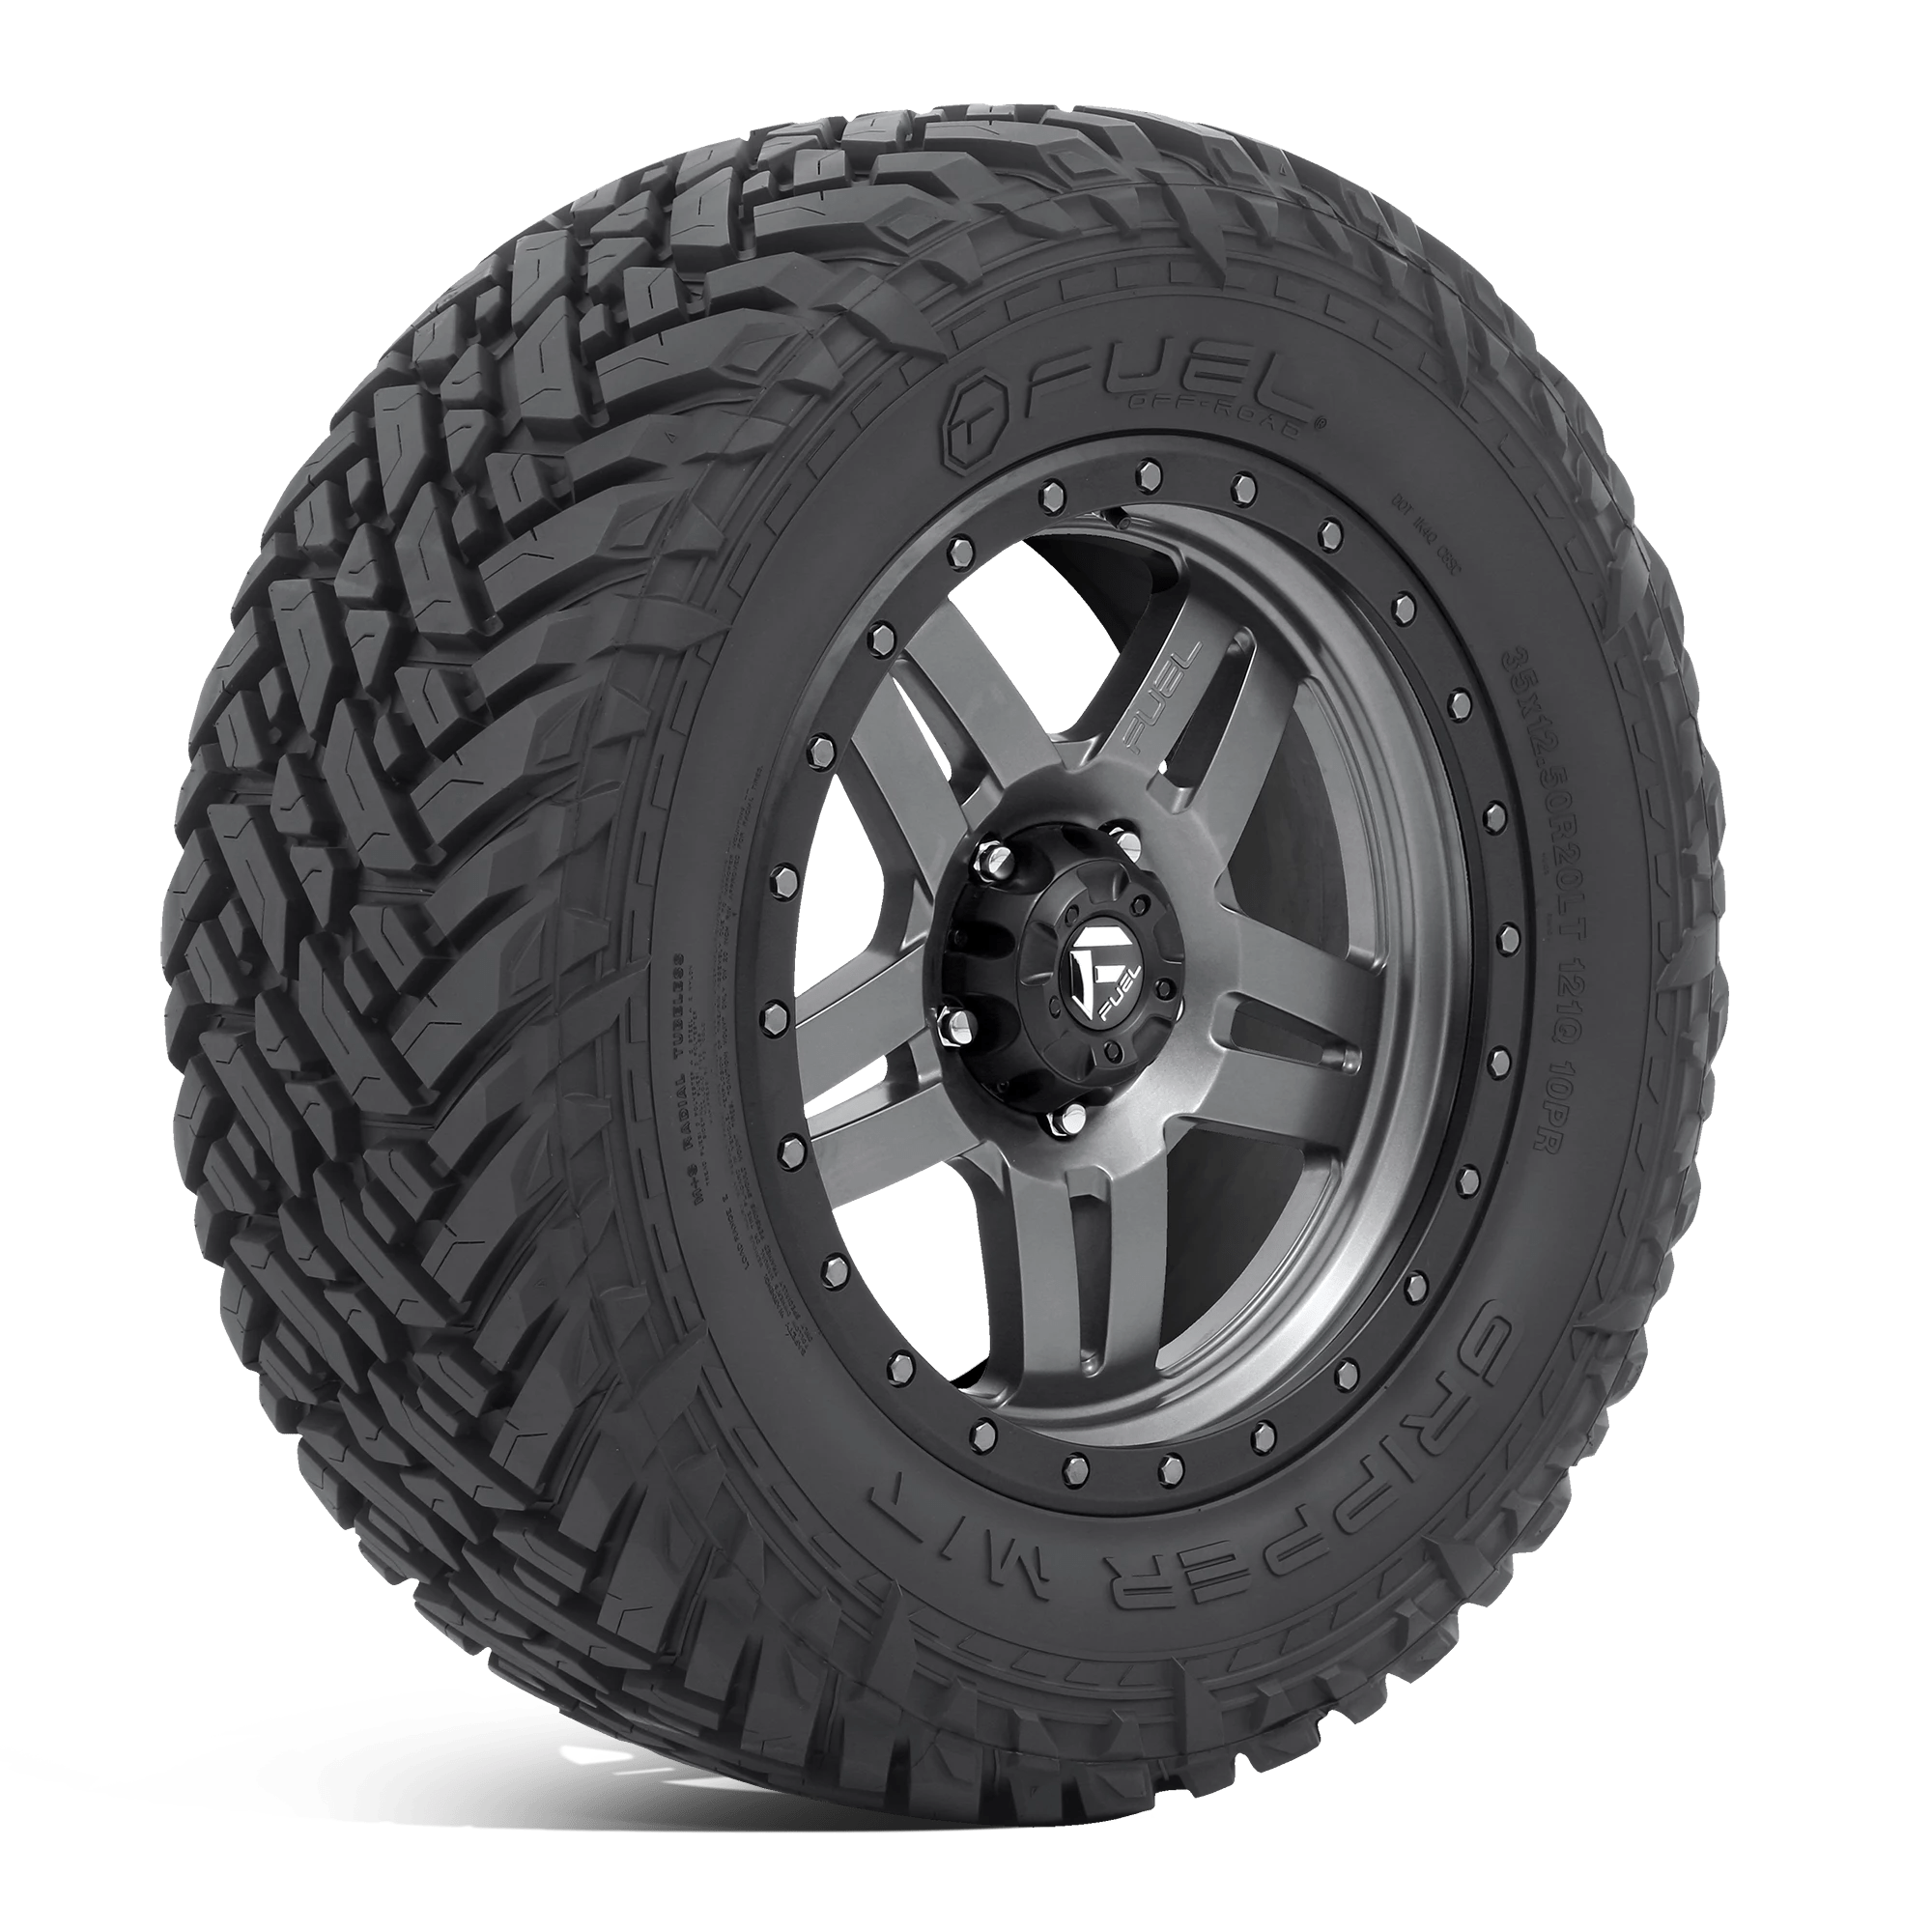 FUEL MUD GRIPPER 37X13.50R26LT Tires